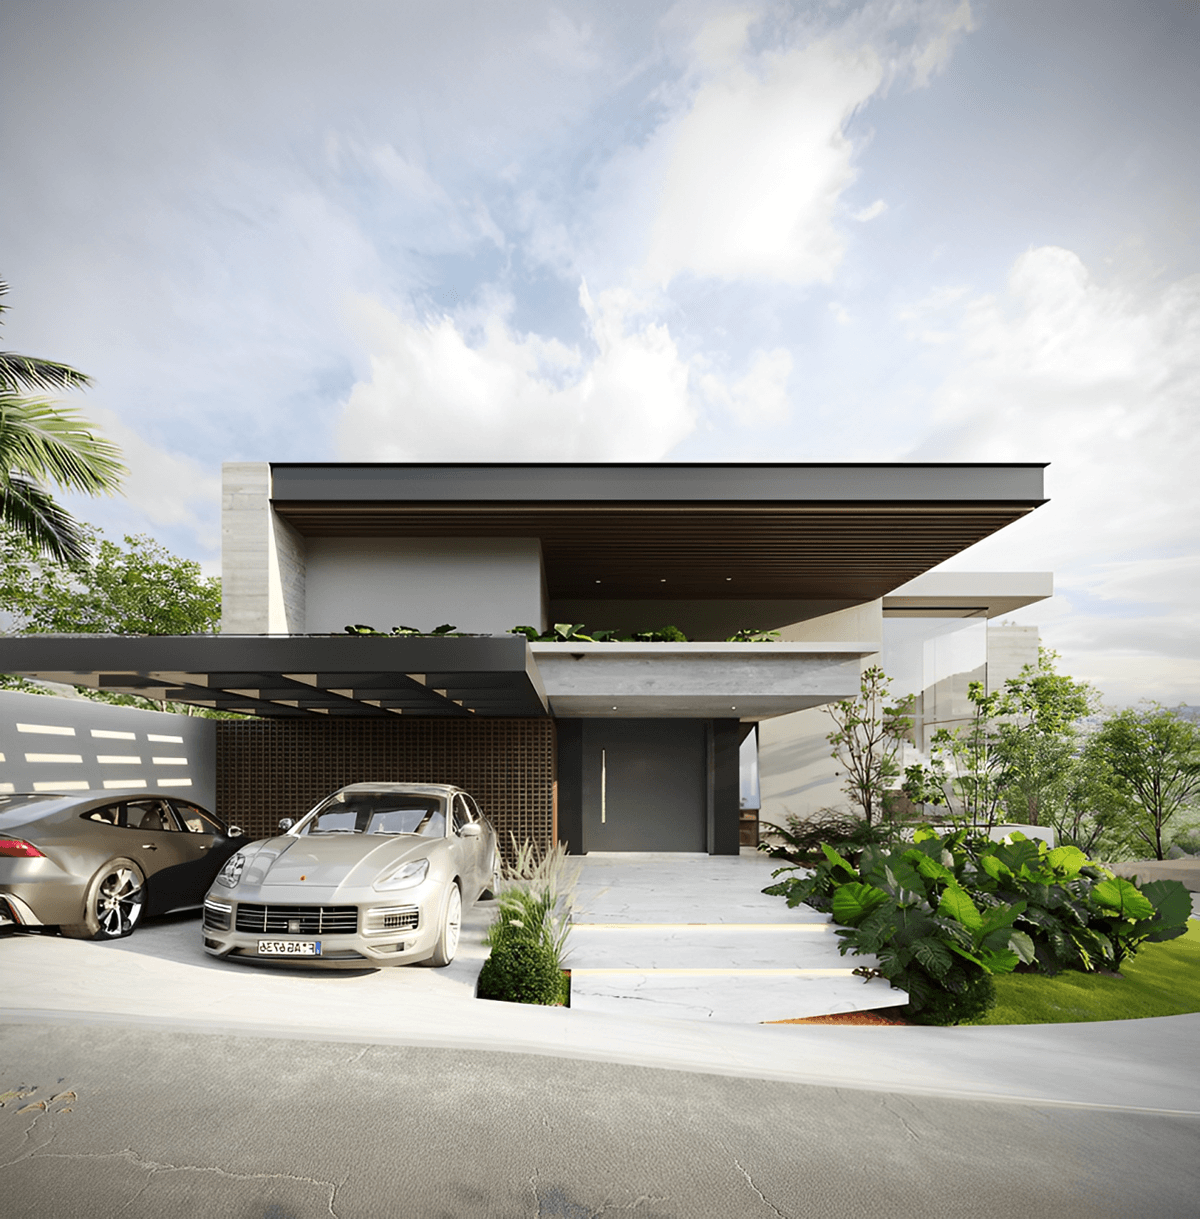 Exterior rendering exterior design architecture Render visualization 3ds max modern 3D exterior vray